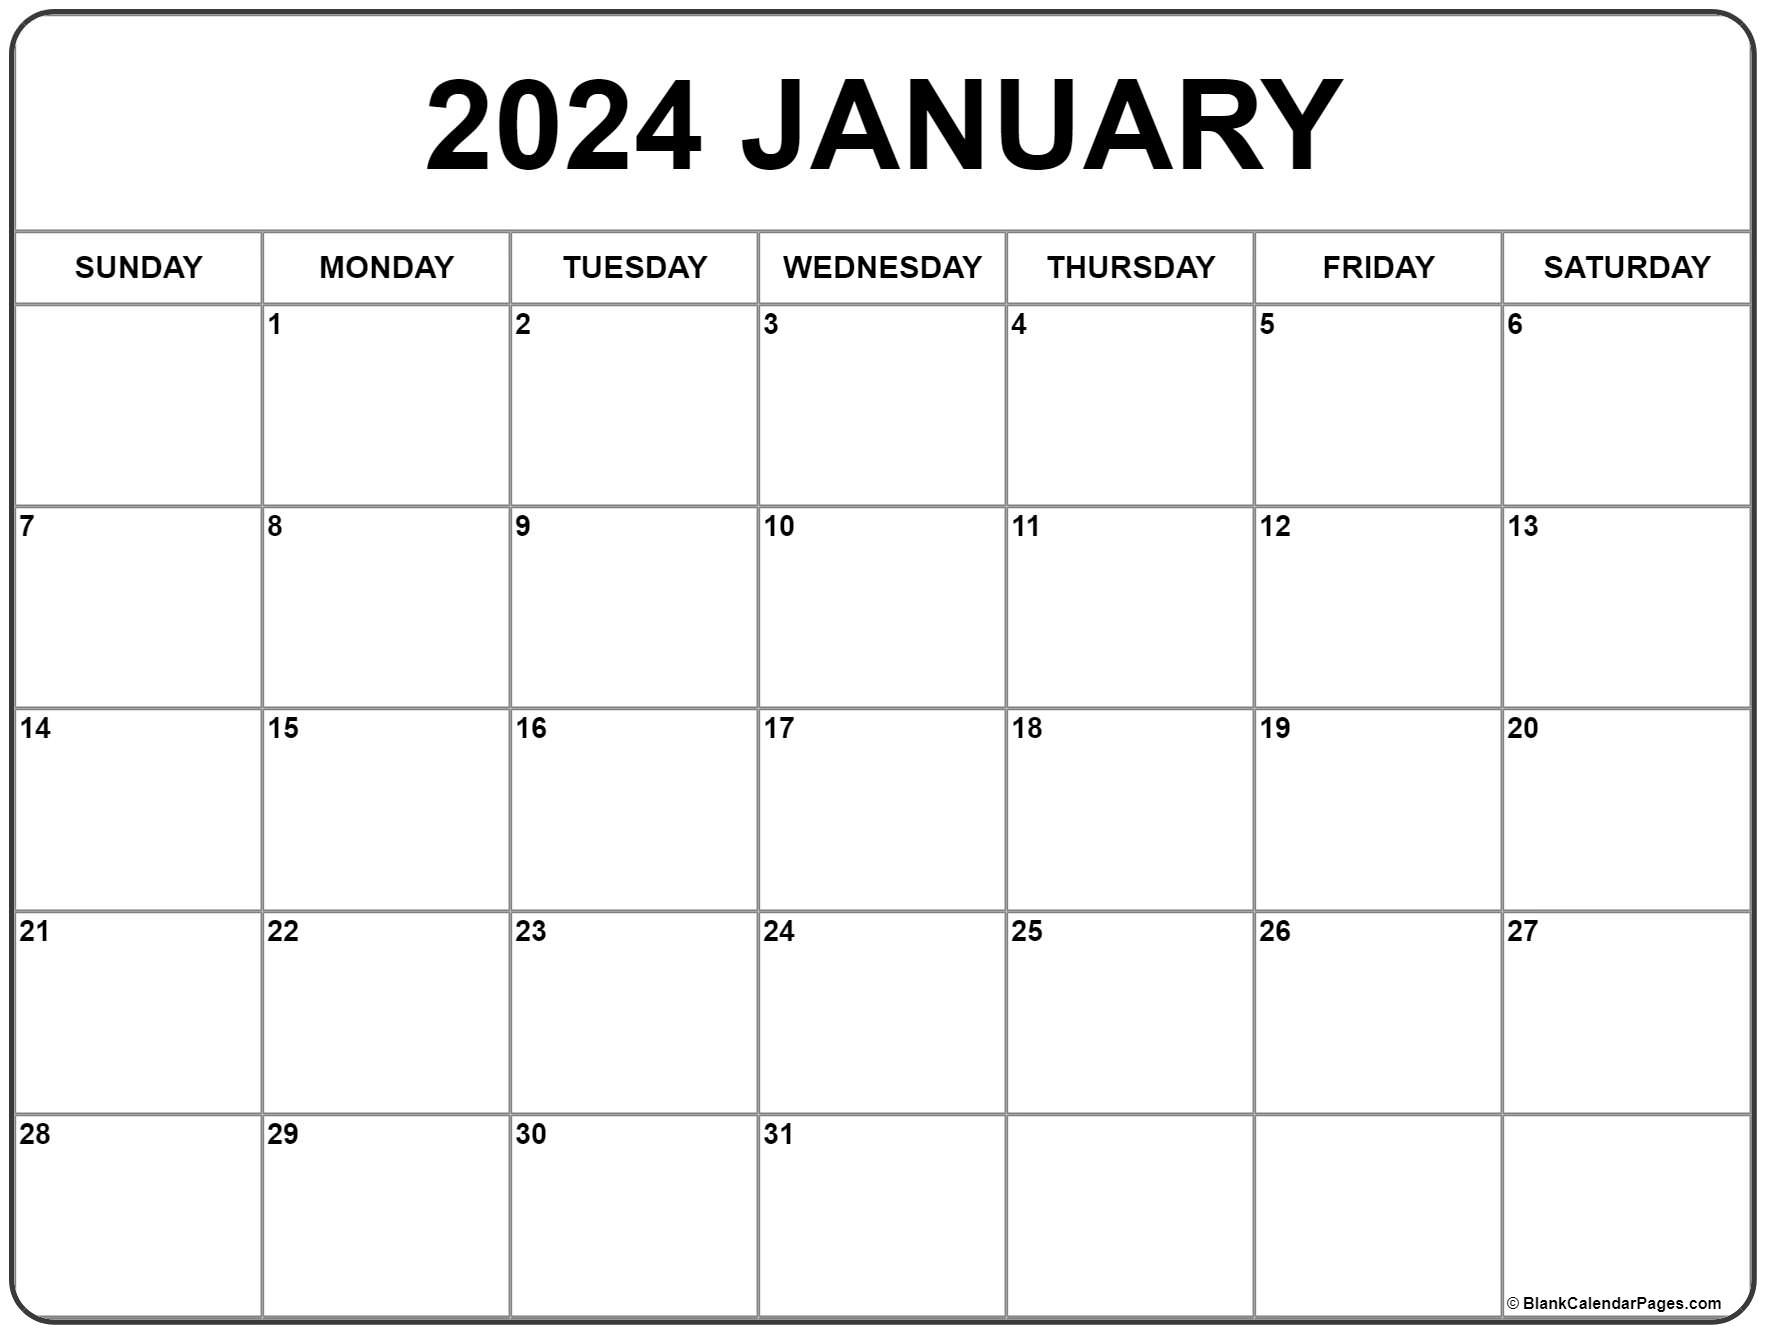 January 2024 Calendar | Free Printable Calendar for January Free Printable Calendar 2024